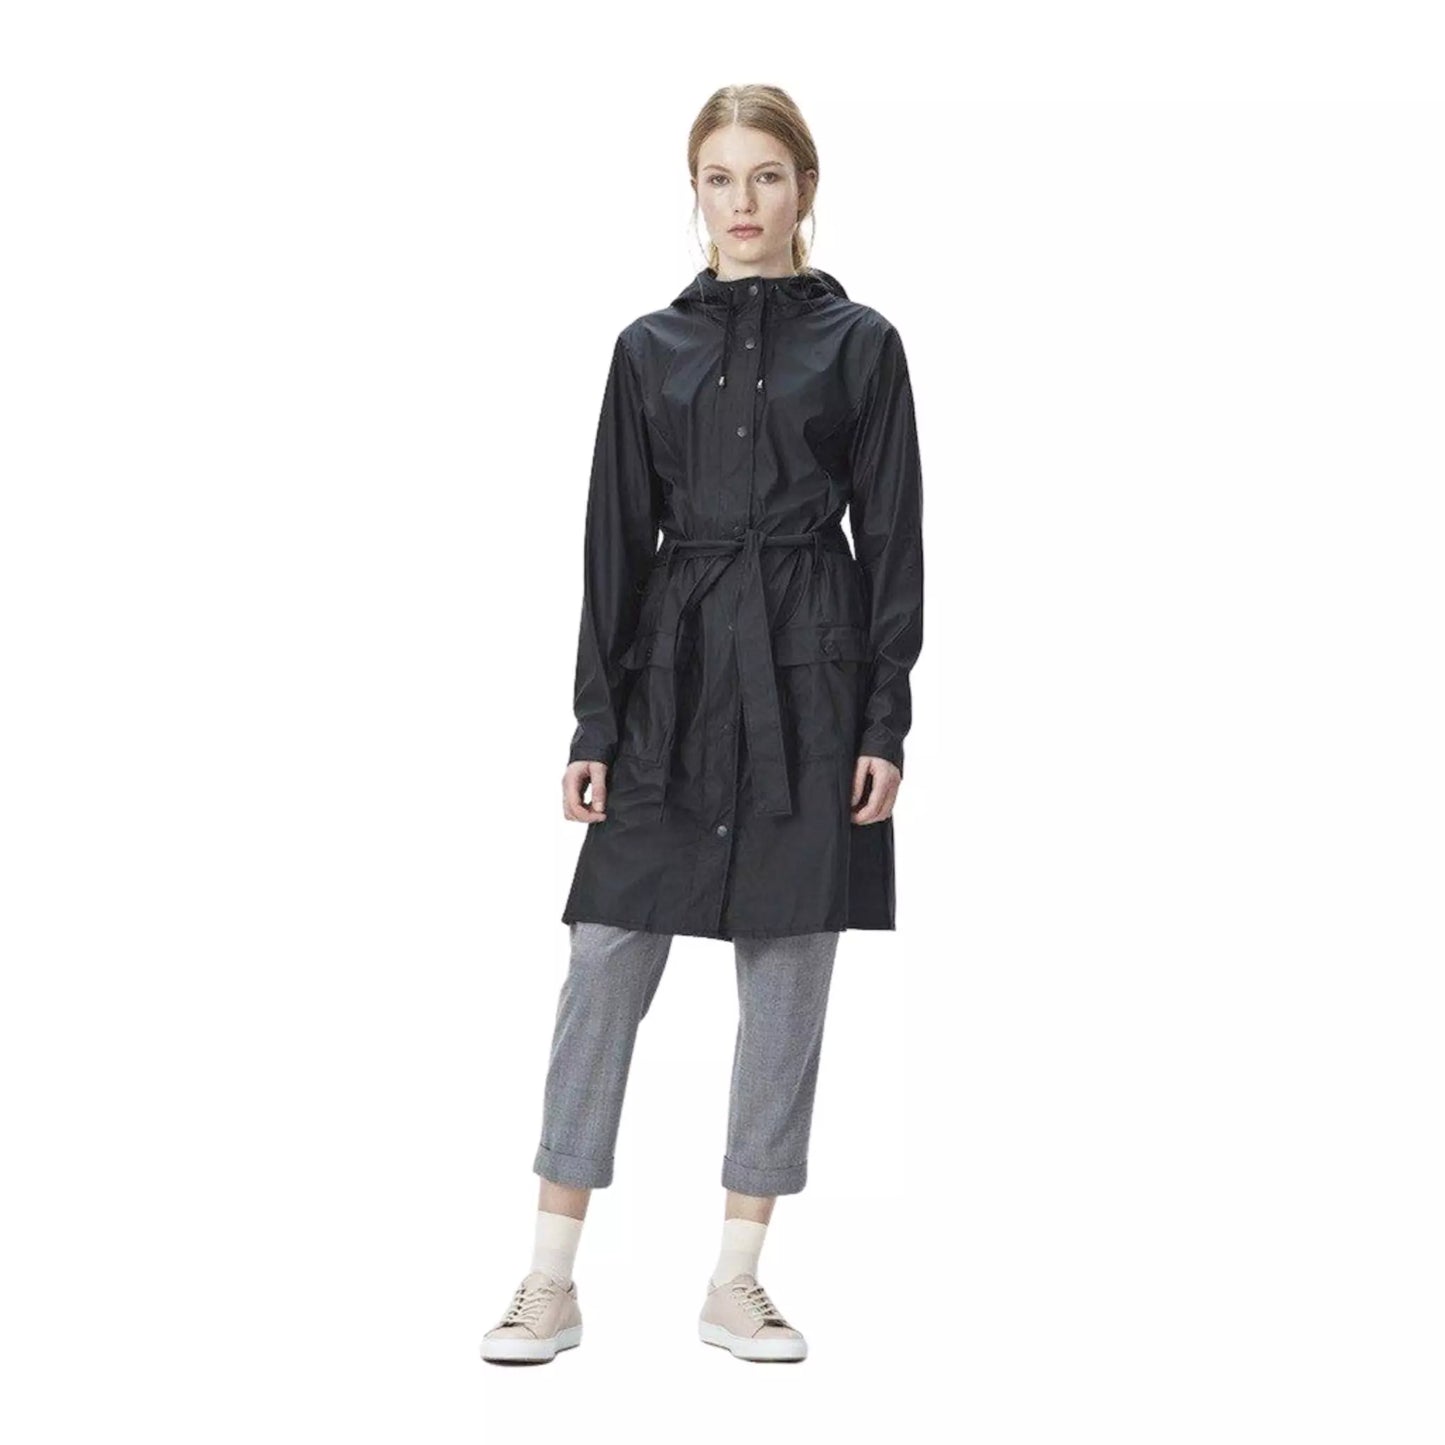 Rains waterproof curve jacket black worn by woman front view